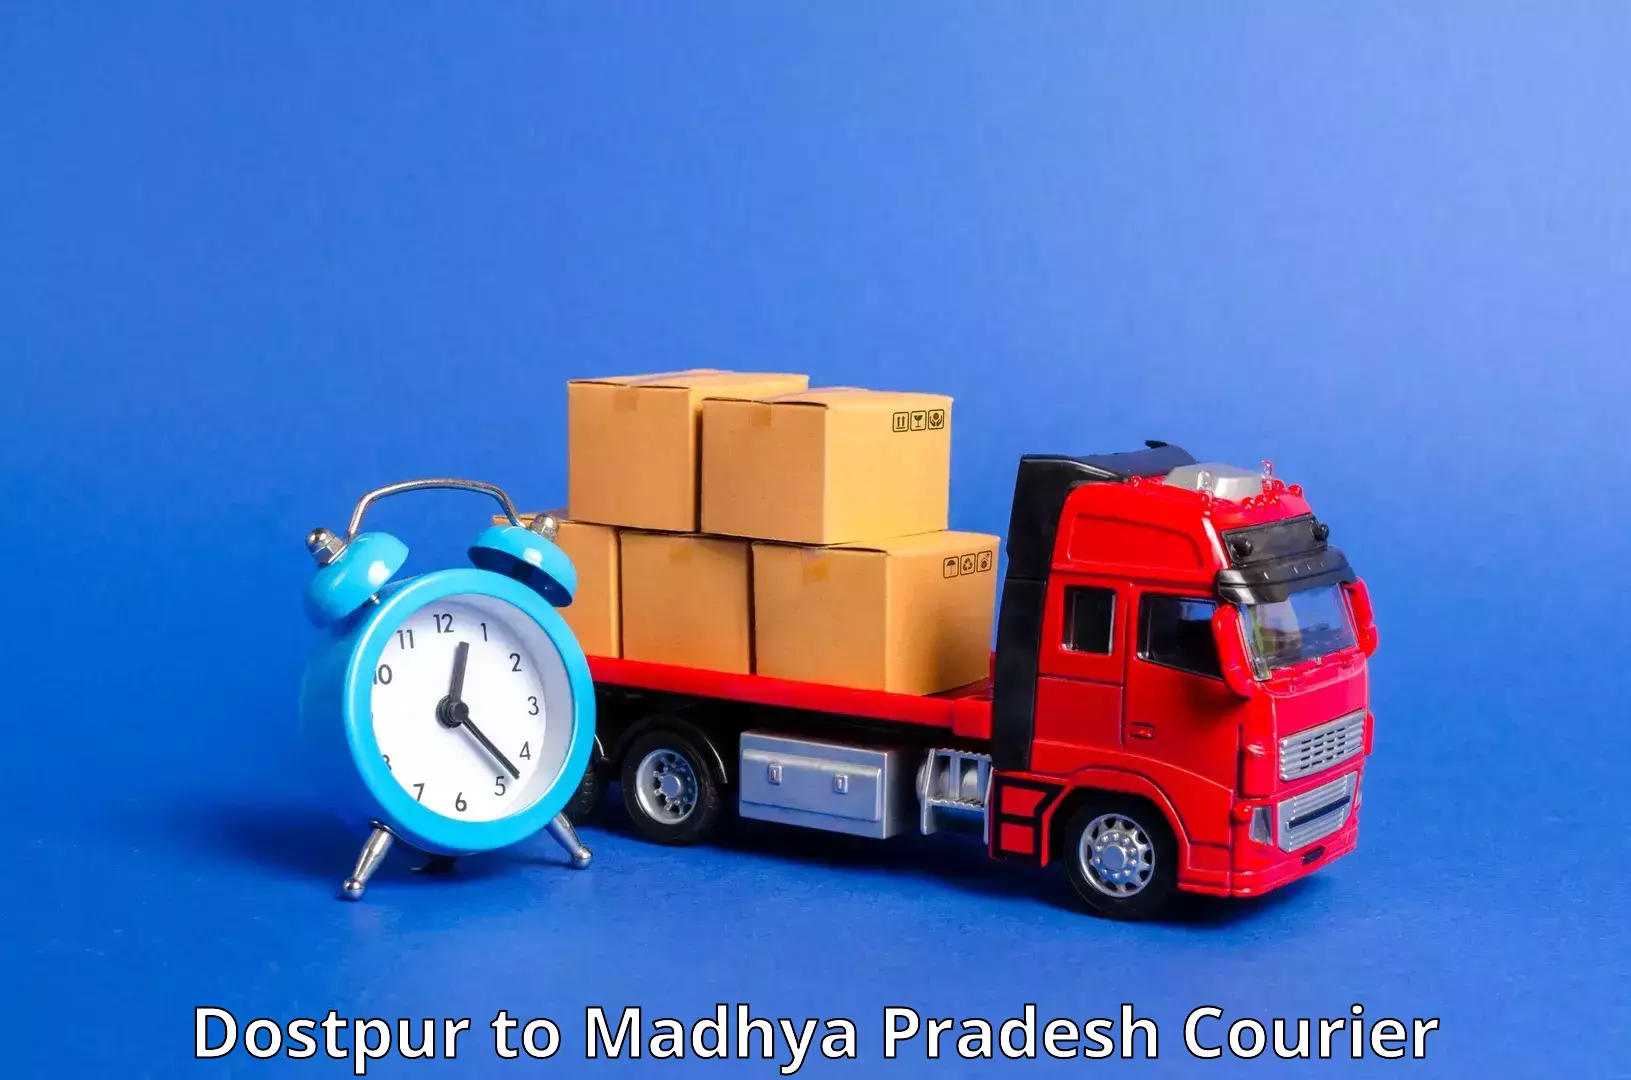 Express mail service Dostpur to Mandideep